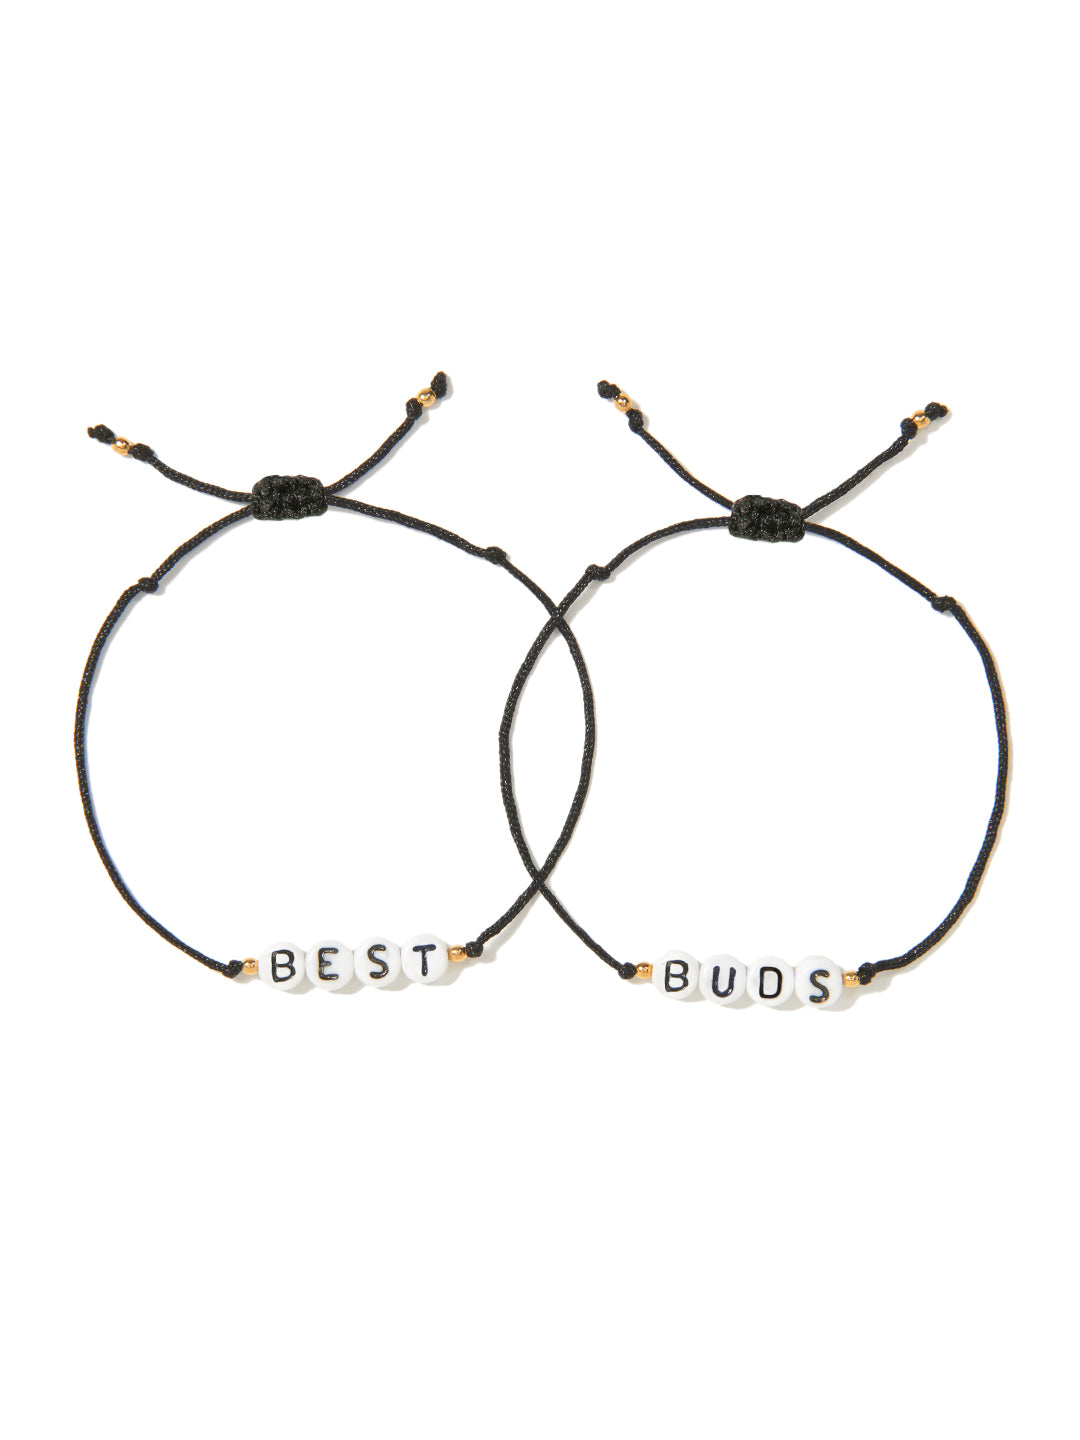 Best Friend Ying Yang Bracelets | Matching Bracelets Best Friends - Bracelet  - Aliexpress